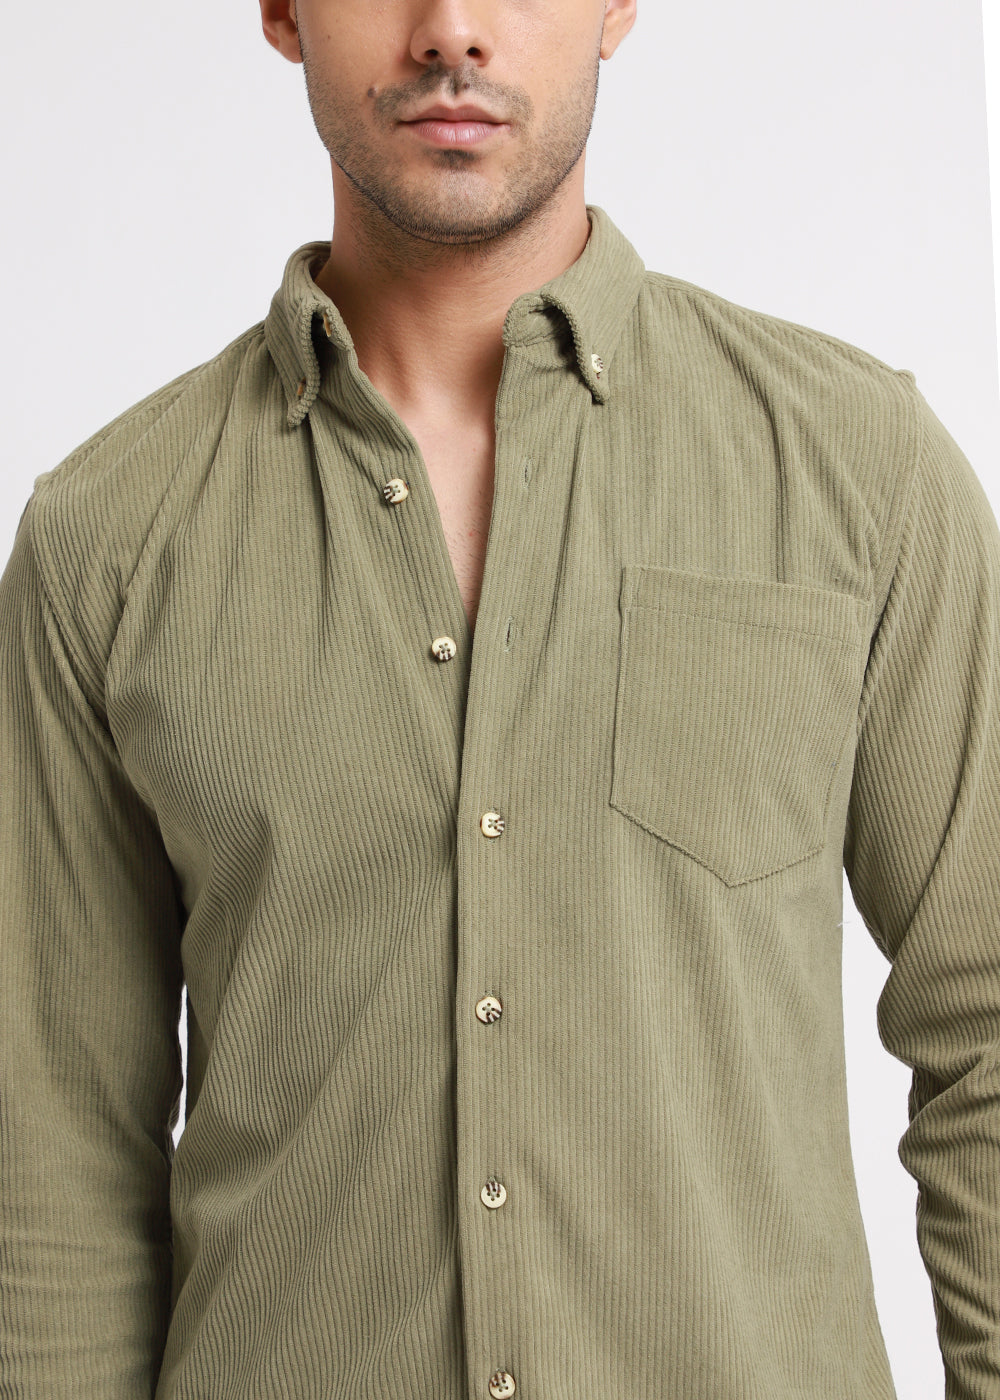 Thyme Green Corduroy Shirt